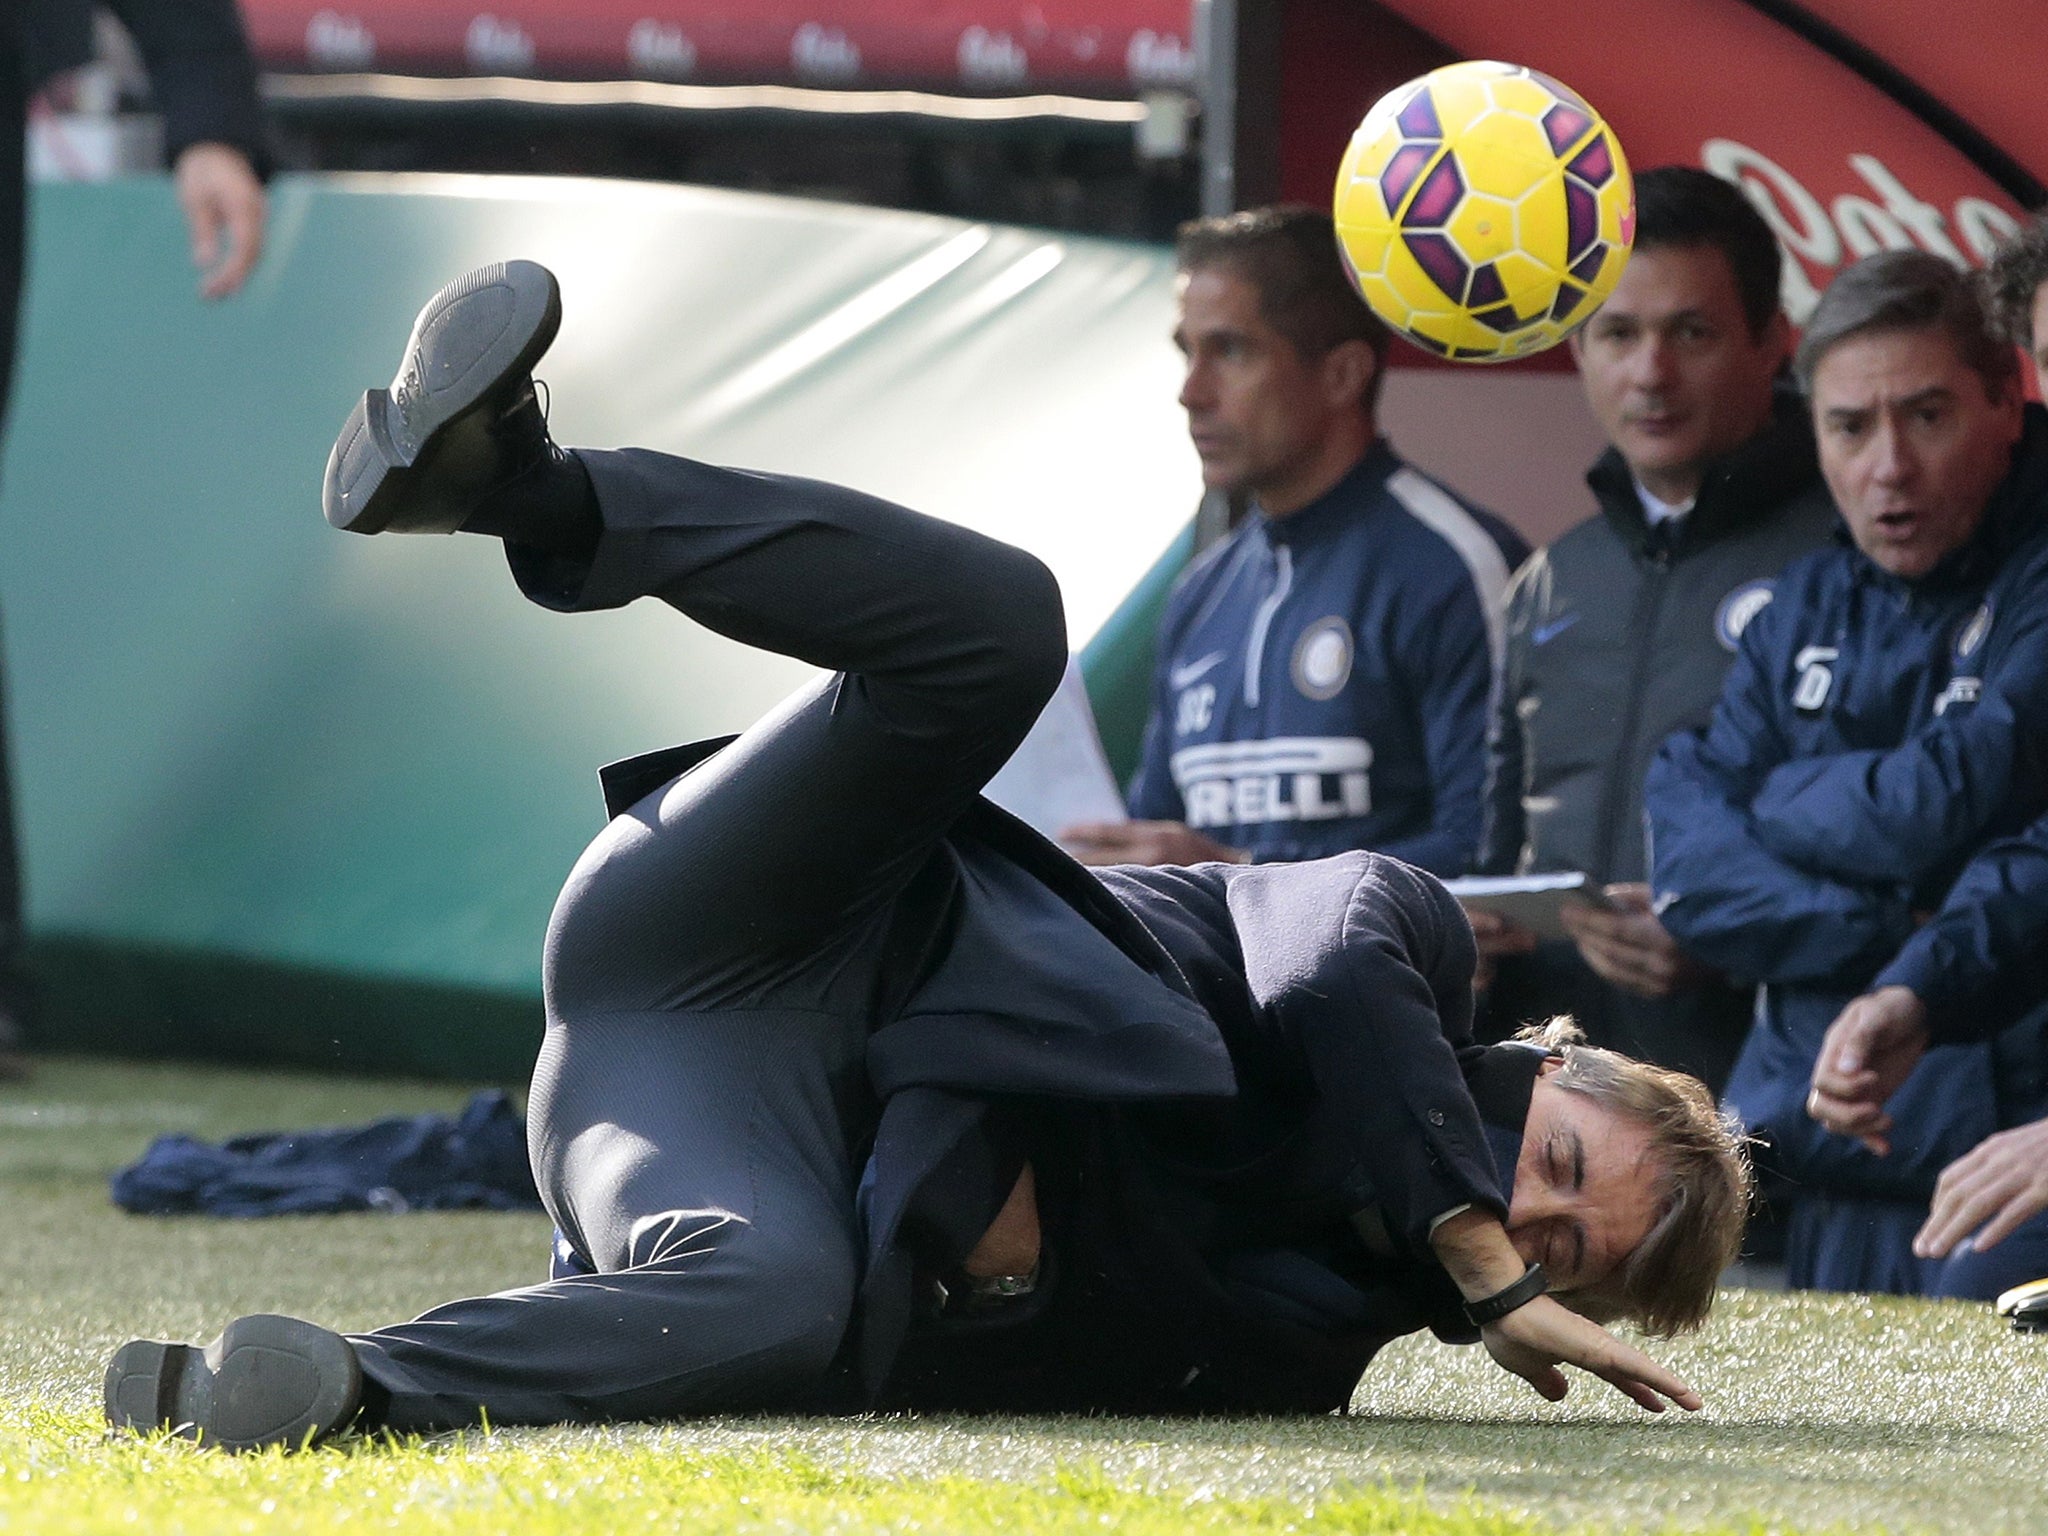 FC Internazionale Milano head coach Roberto Mancini hit by a ball.